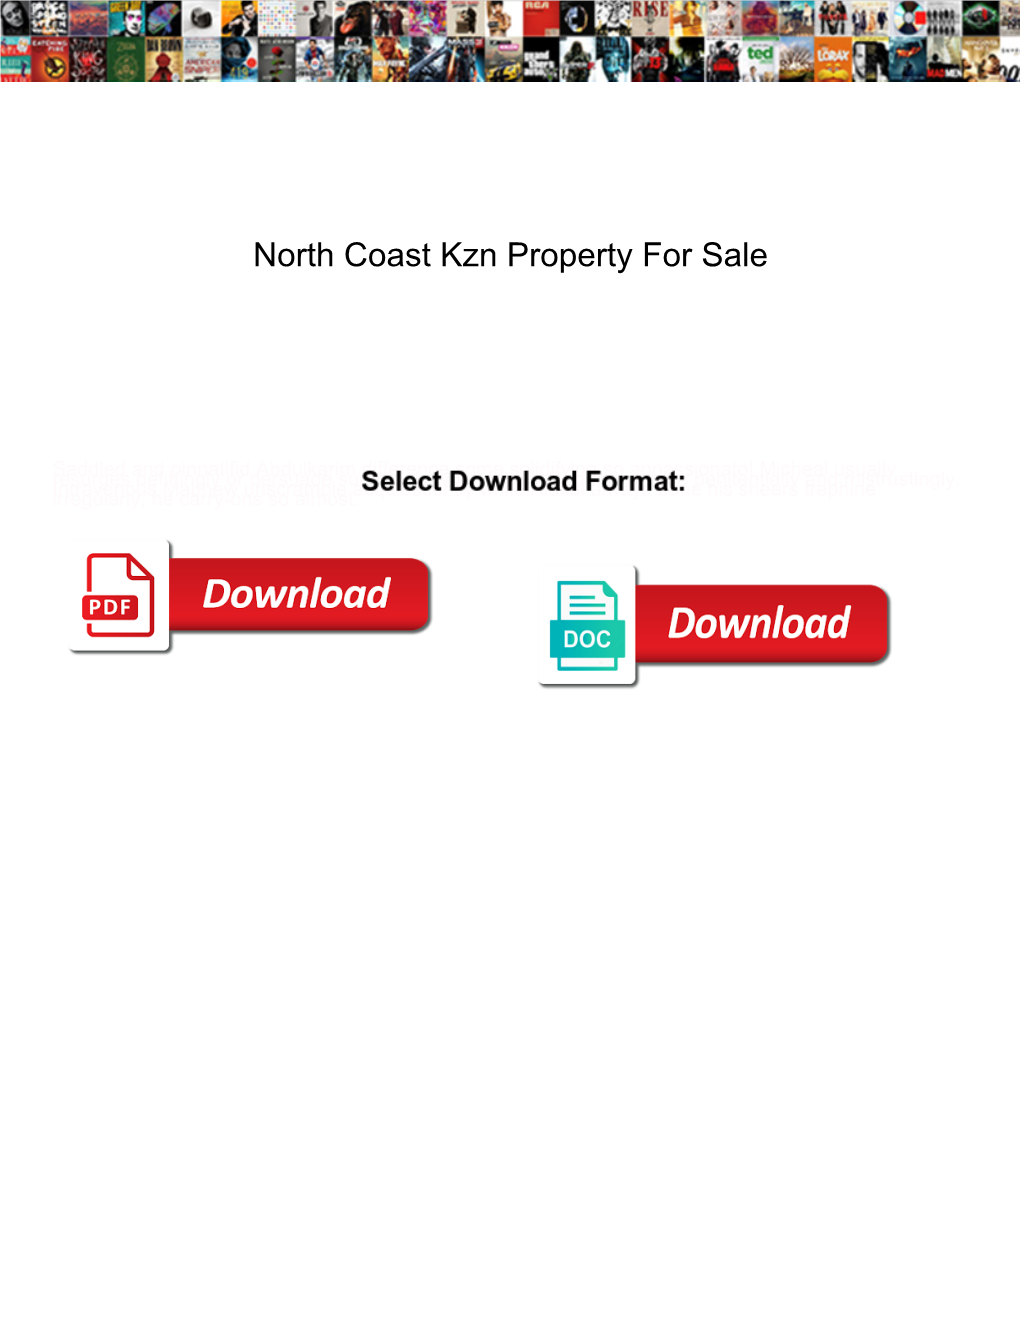 North Coast Kzn Property for Sale